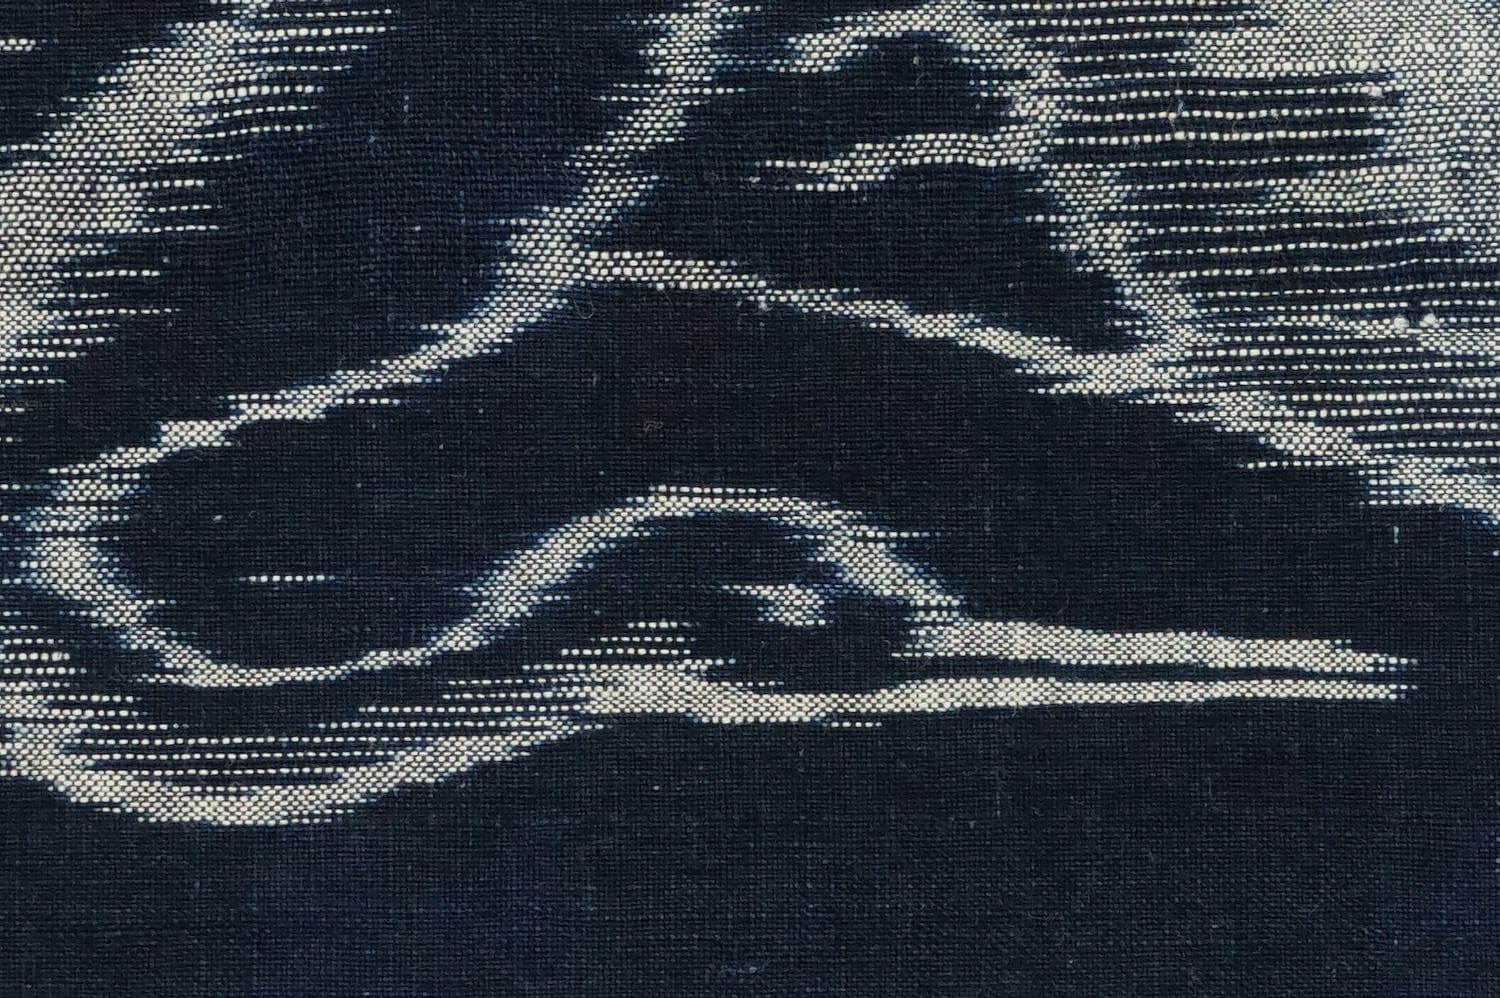 399 絵絣 布団皮 4幅 鶴 藍染木綿 古布 生地 リメイク素材